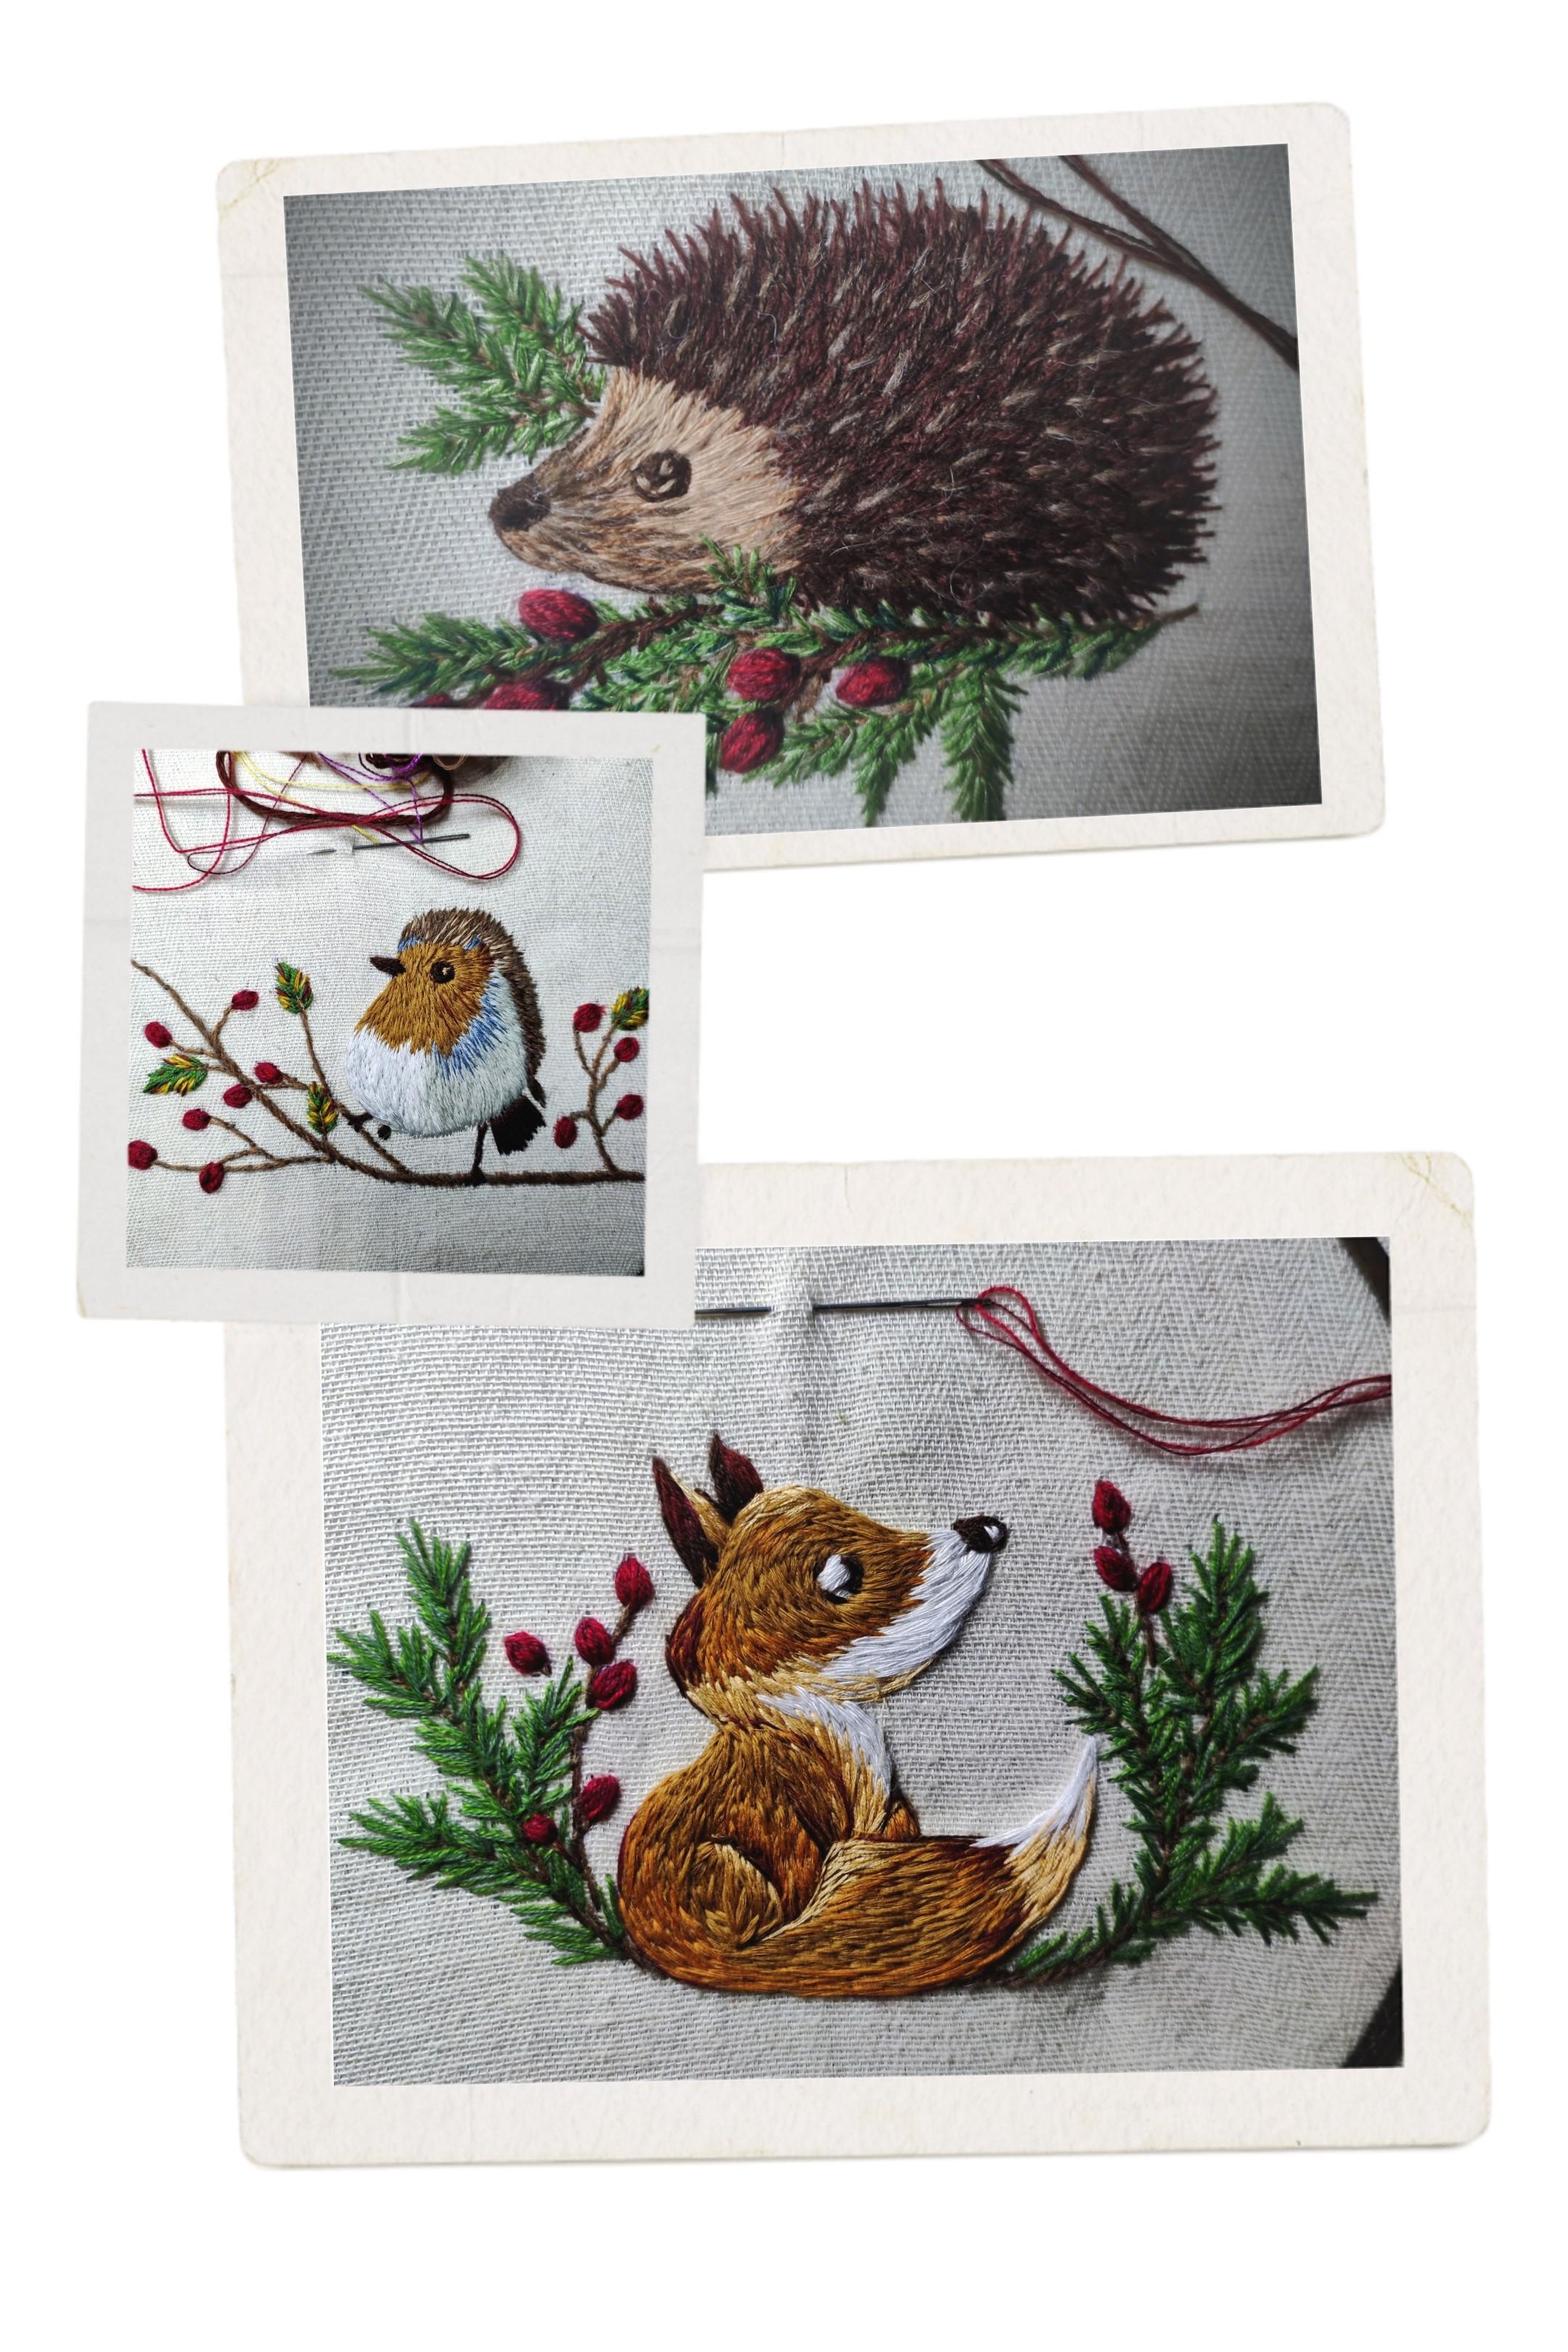 Xmas embroidery🦔🦊🐦🌲#embroiderylove #nadelmalerei #weihnachtsdeko